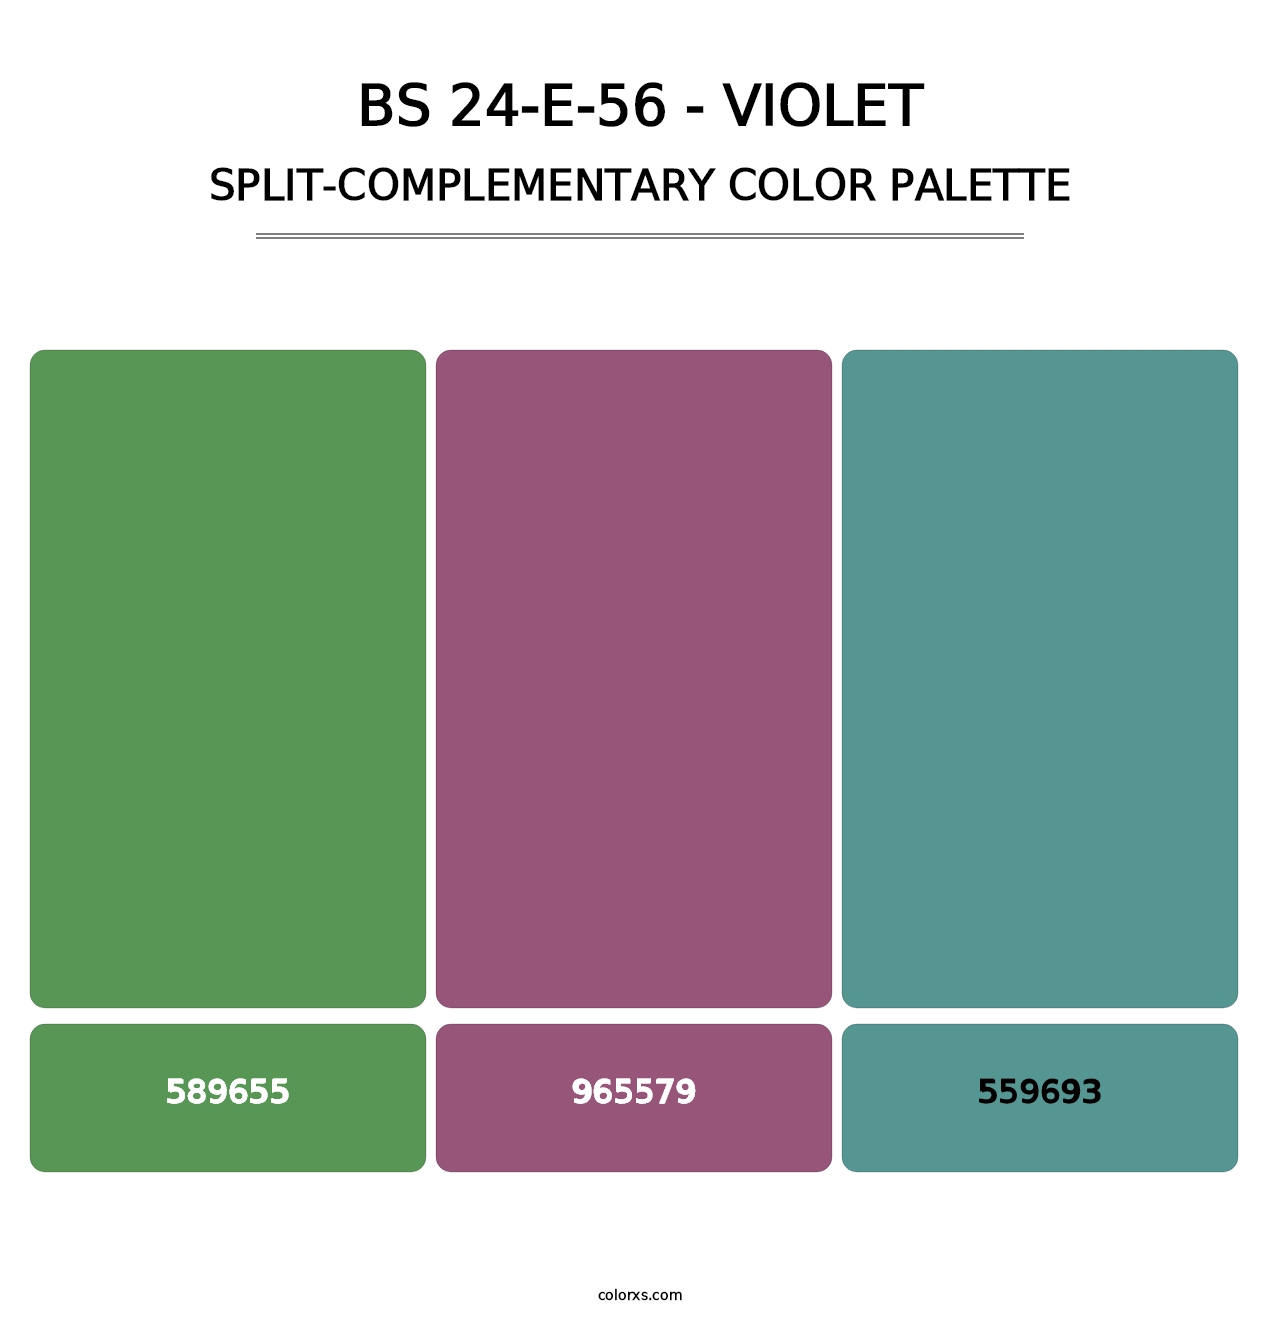 BS 24-E-56 - Violet - Split-Complementary Color Palette